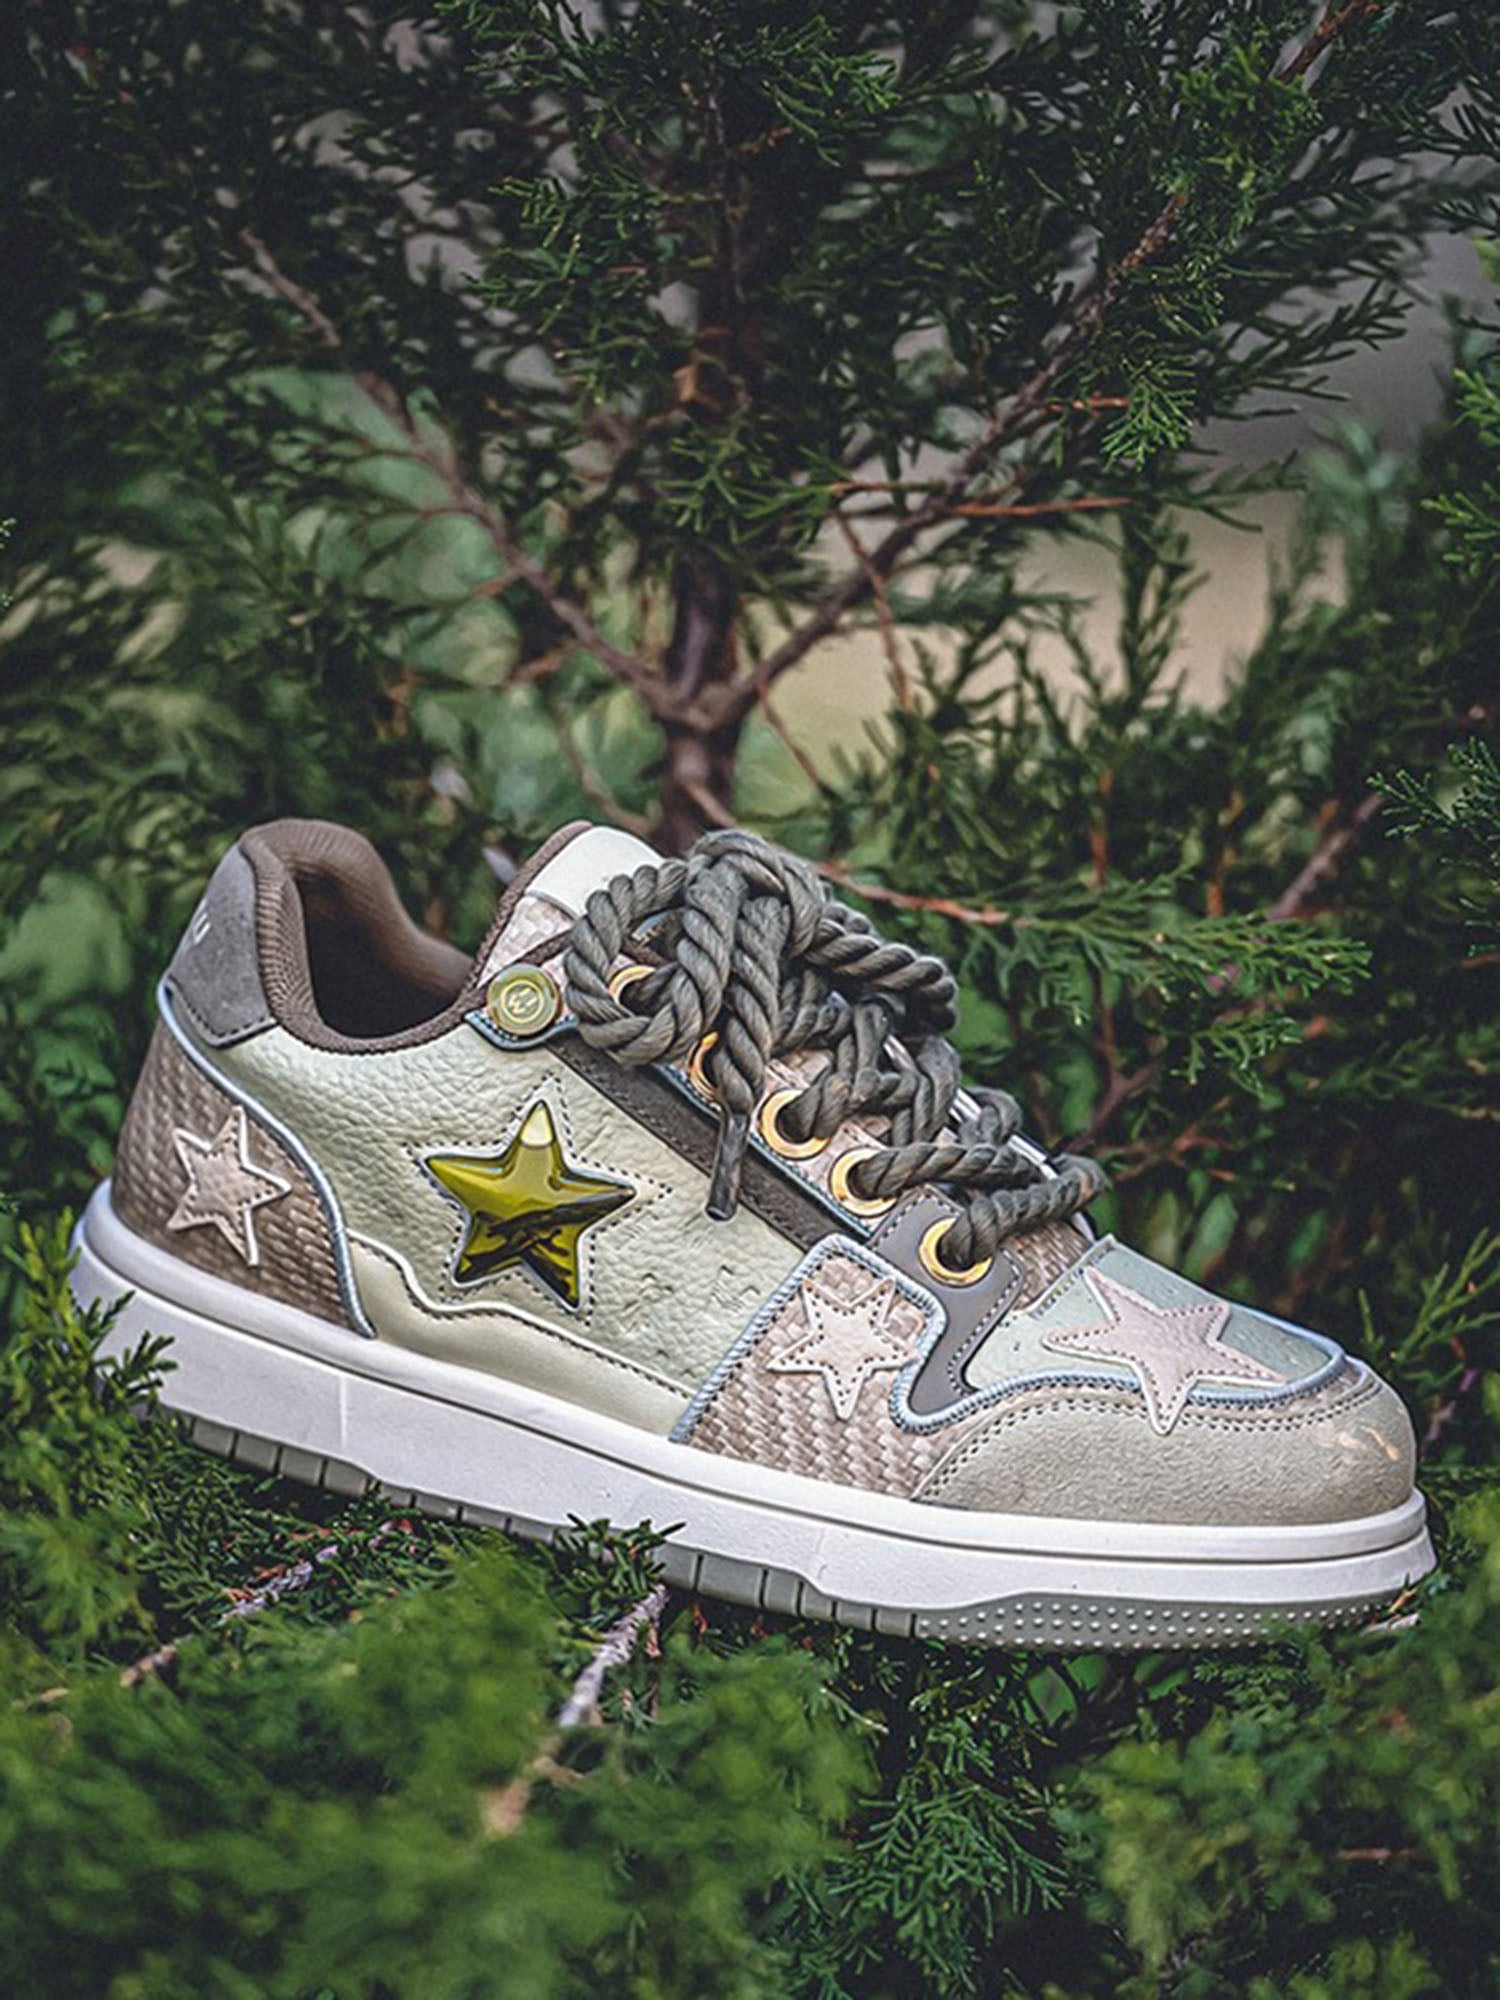 Thesupermade West Lake Longjing Star Hip-Hop Street Sneakers